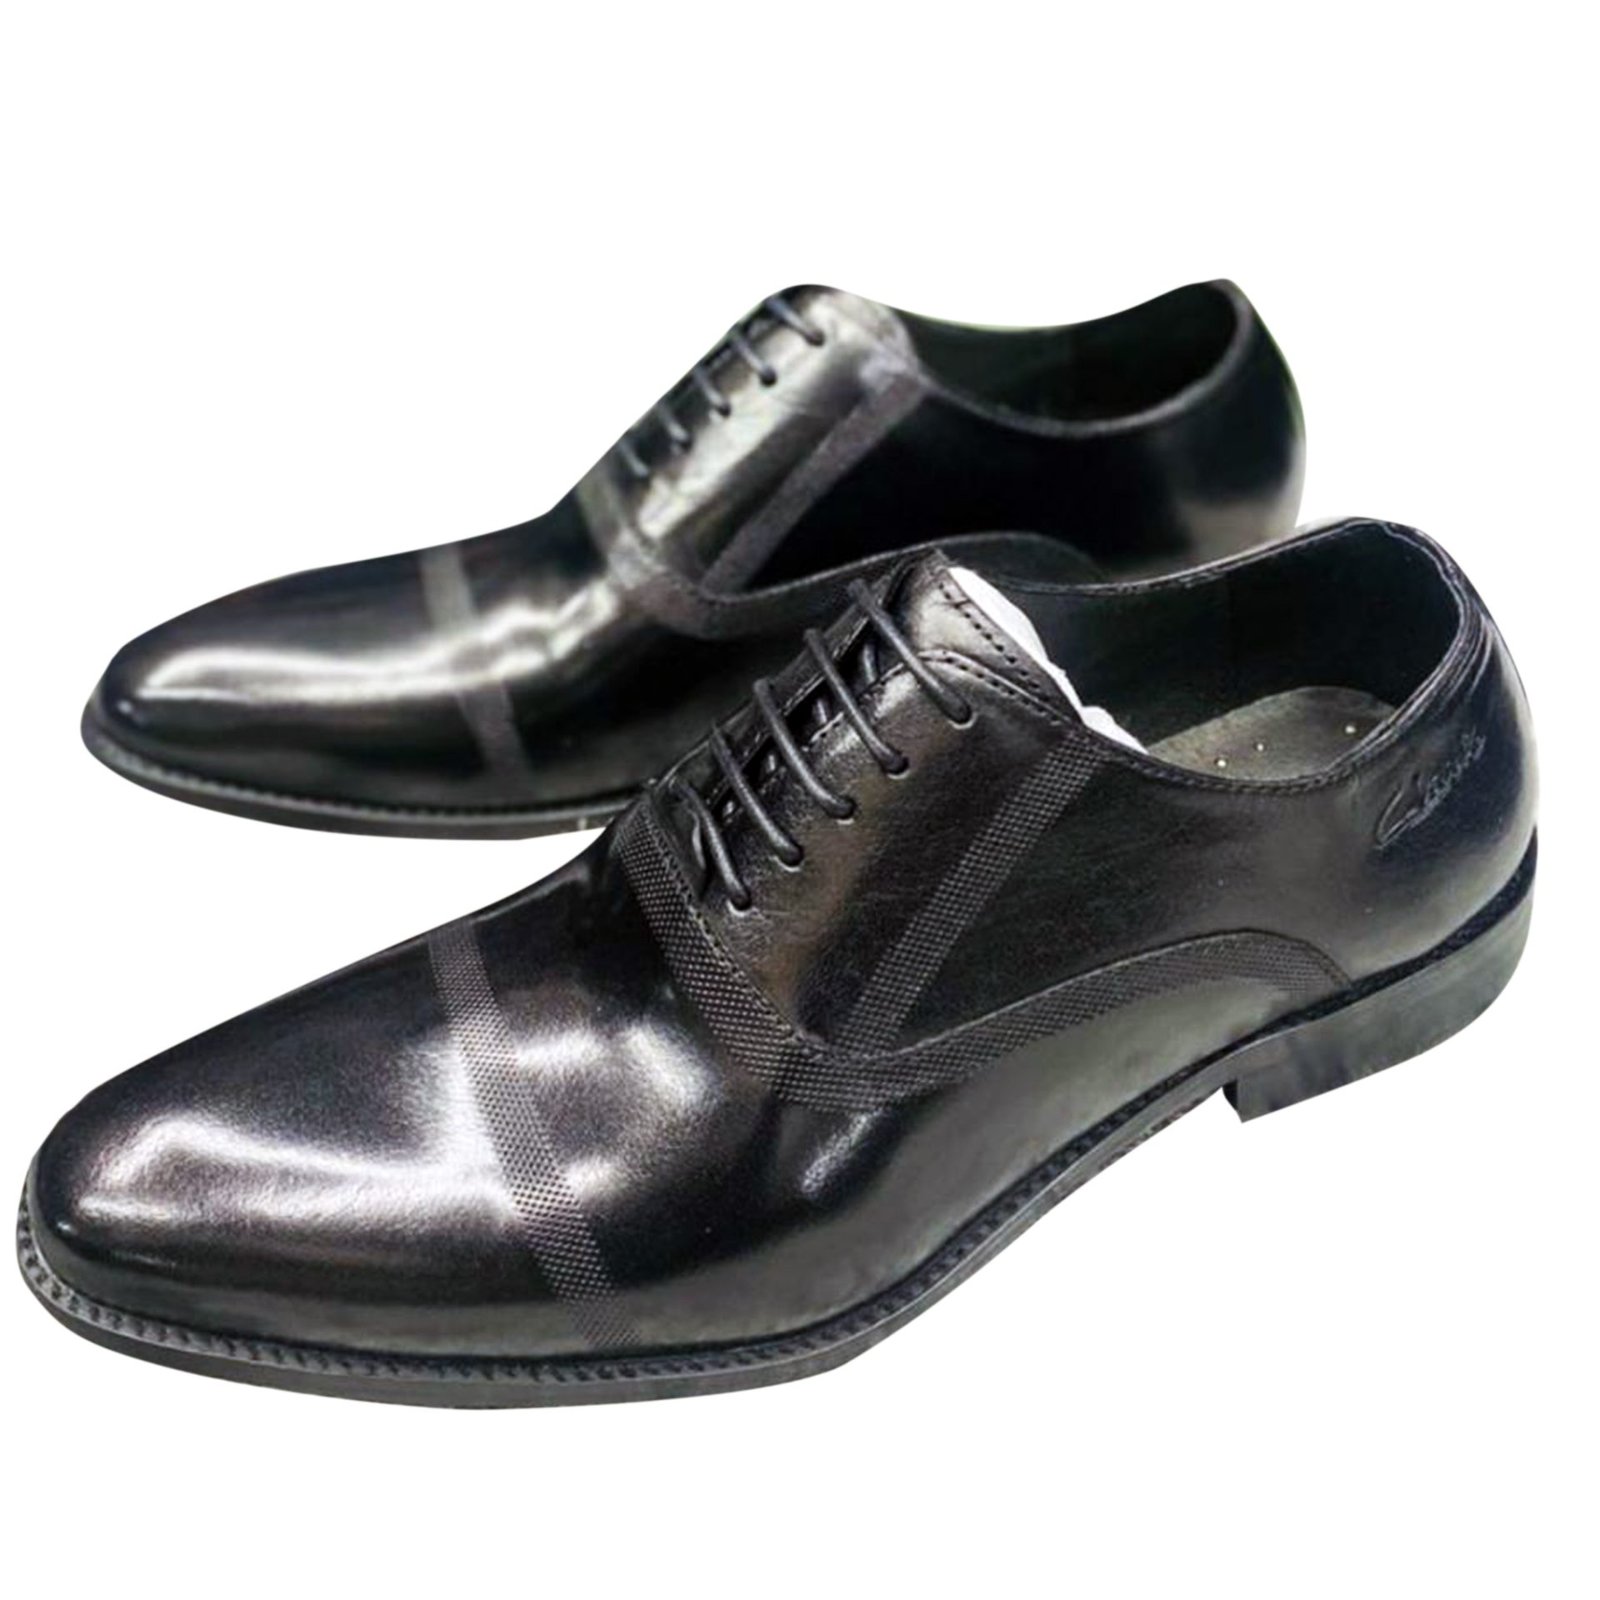 New Mordern Leather Shoes For Men – Black - Discount Duuka